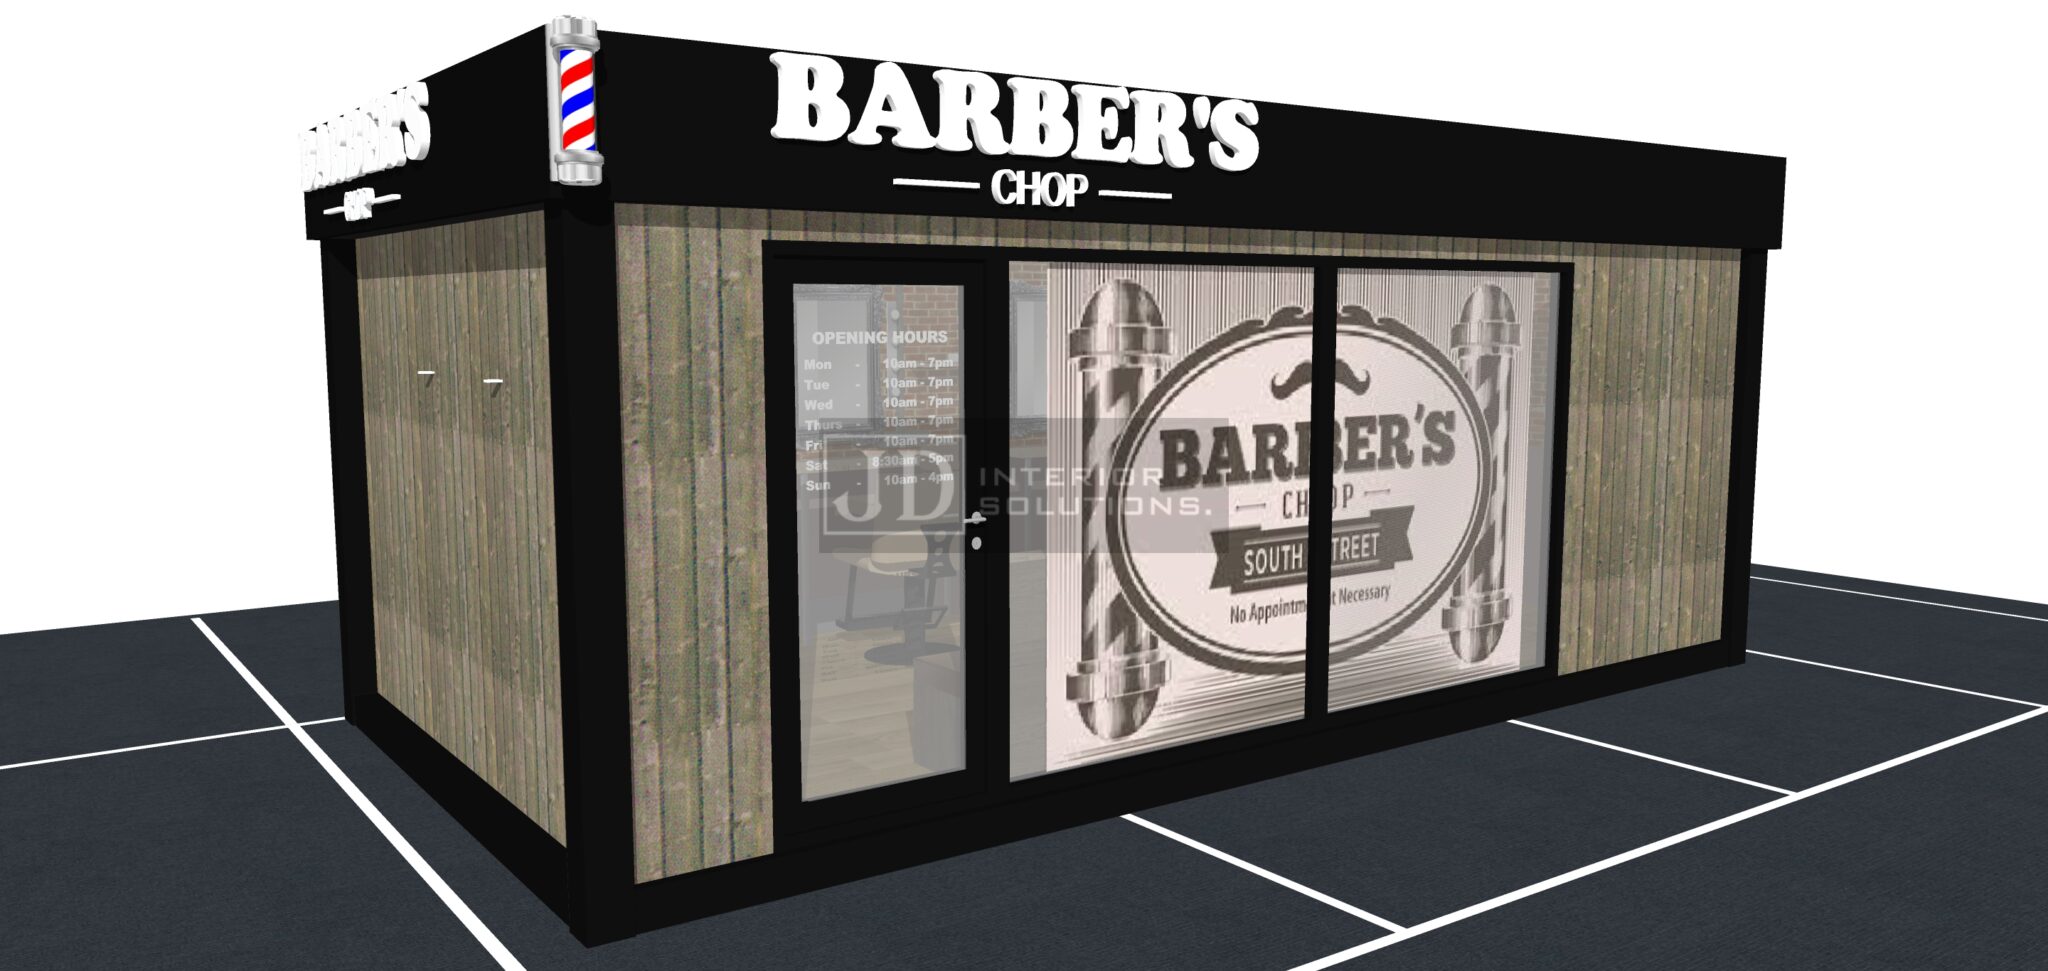 Barbers Chop 6.8m x 3.4m